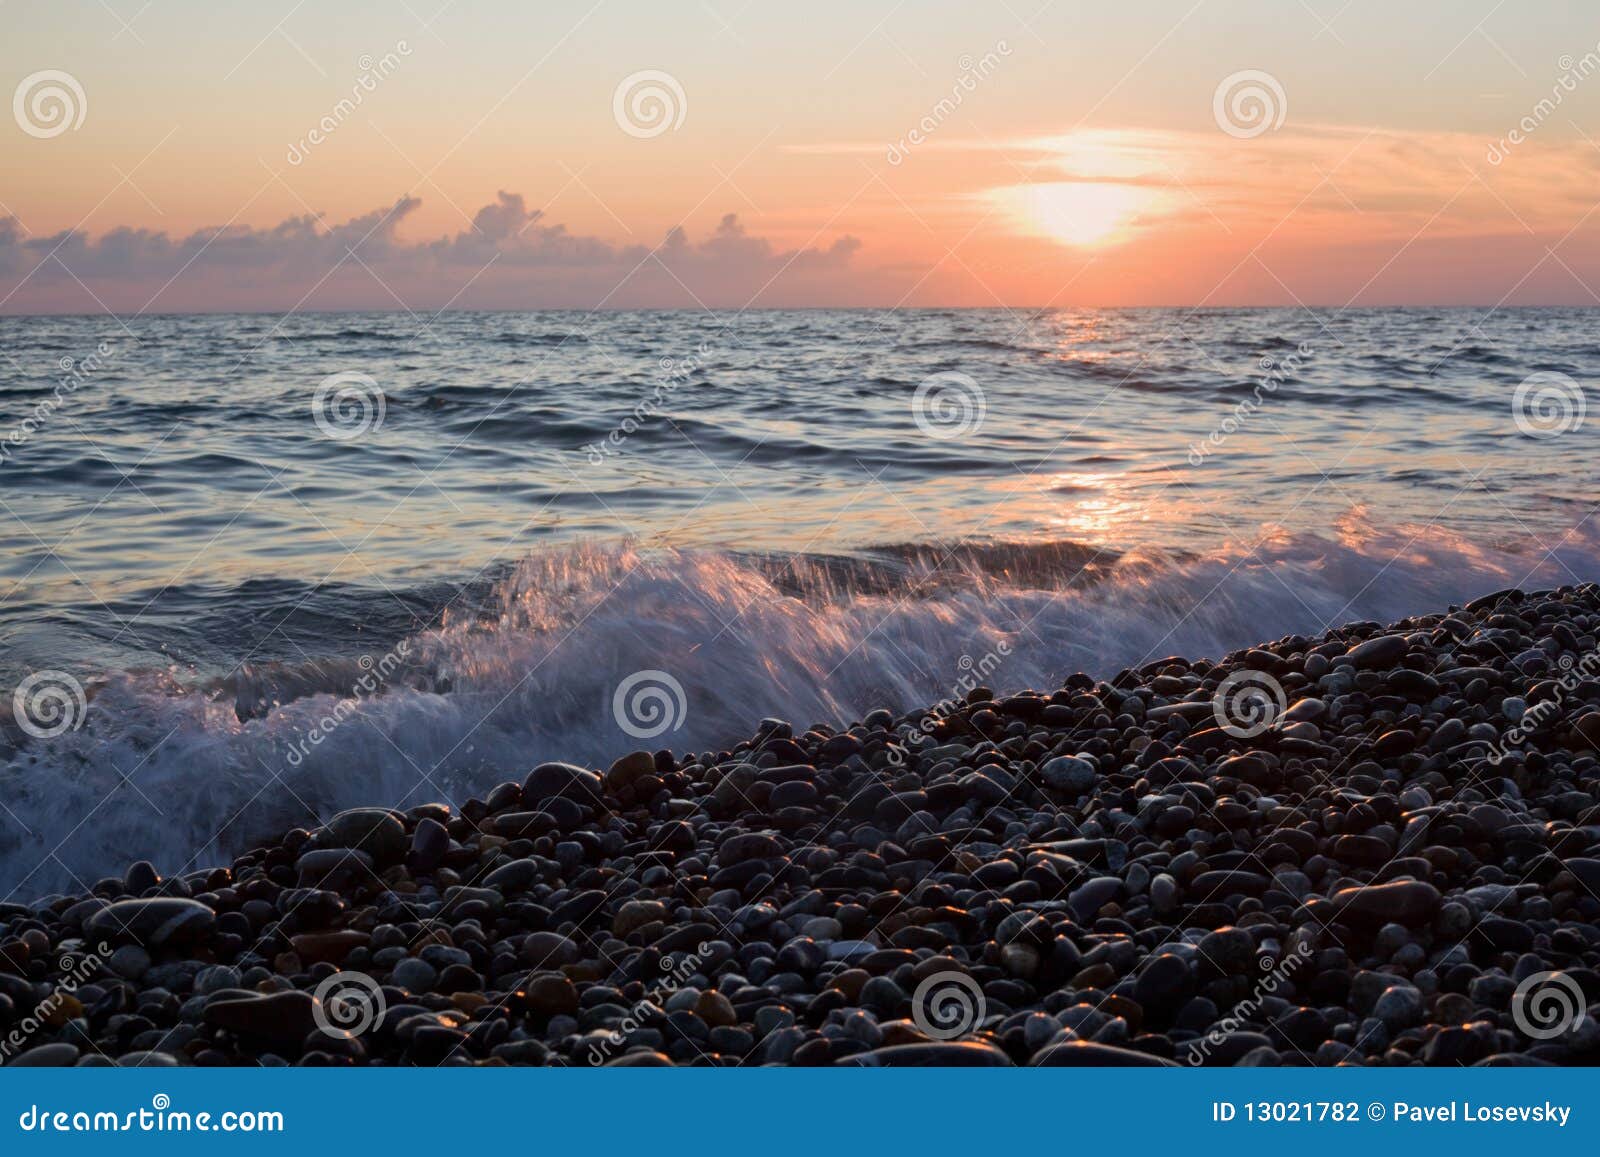 sea coast with waves on sunset, stony beach